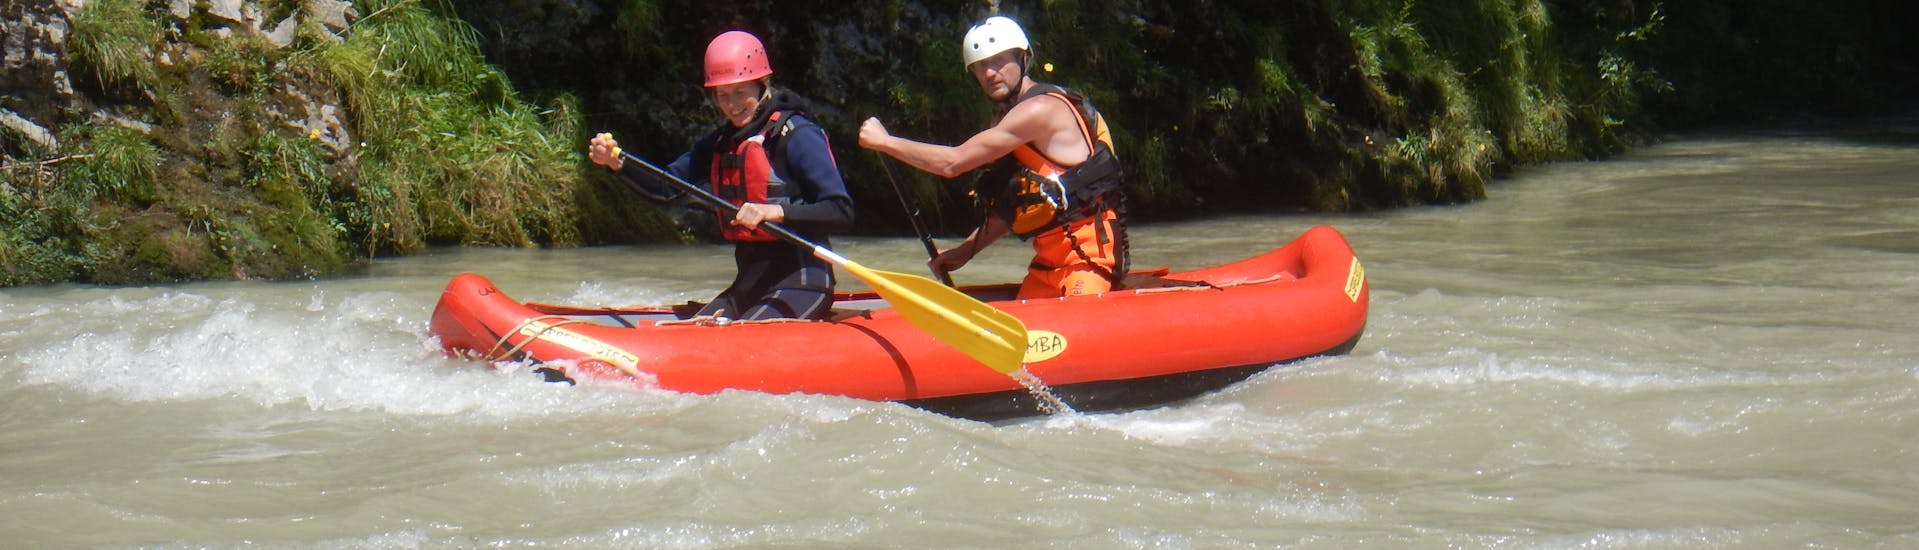 Rafting para expertos en Kitzbühel - Kitzbüheler Ache.